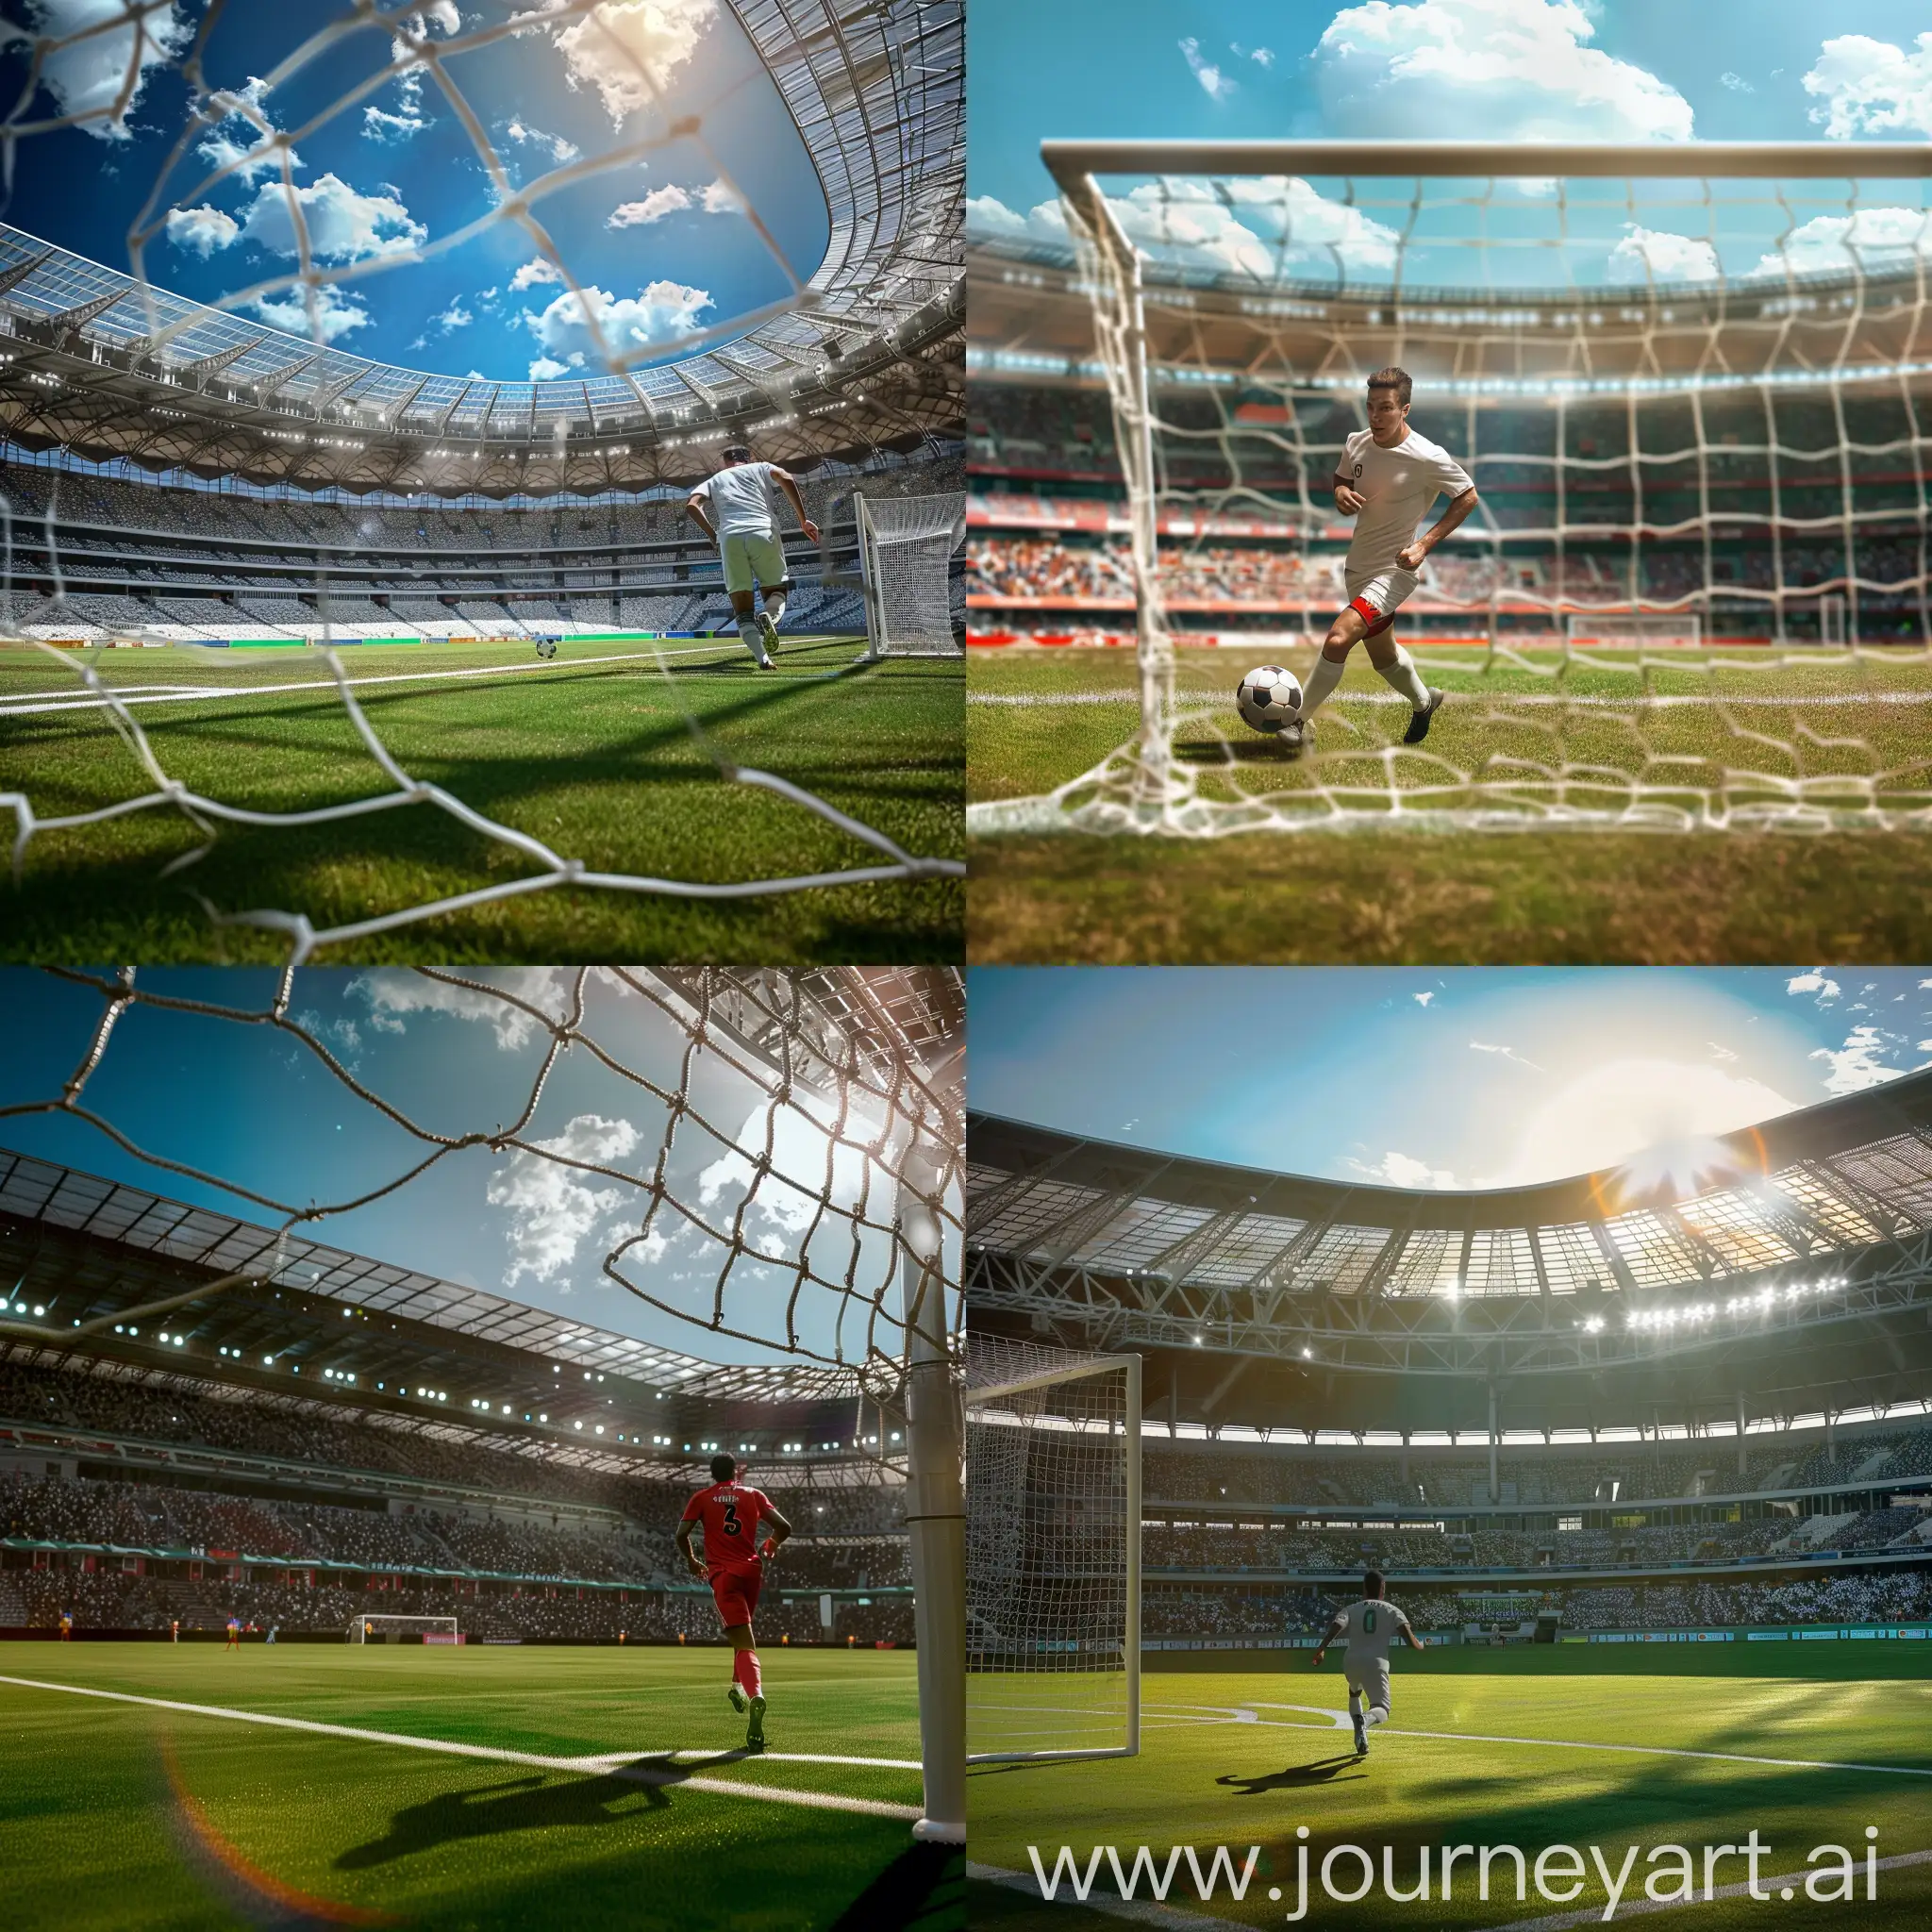 Dynamic-Soccer-Player-Racing-Towards-Goal-in-Grand-Stadium